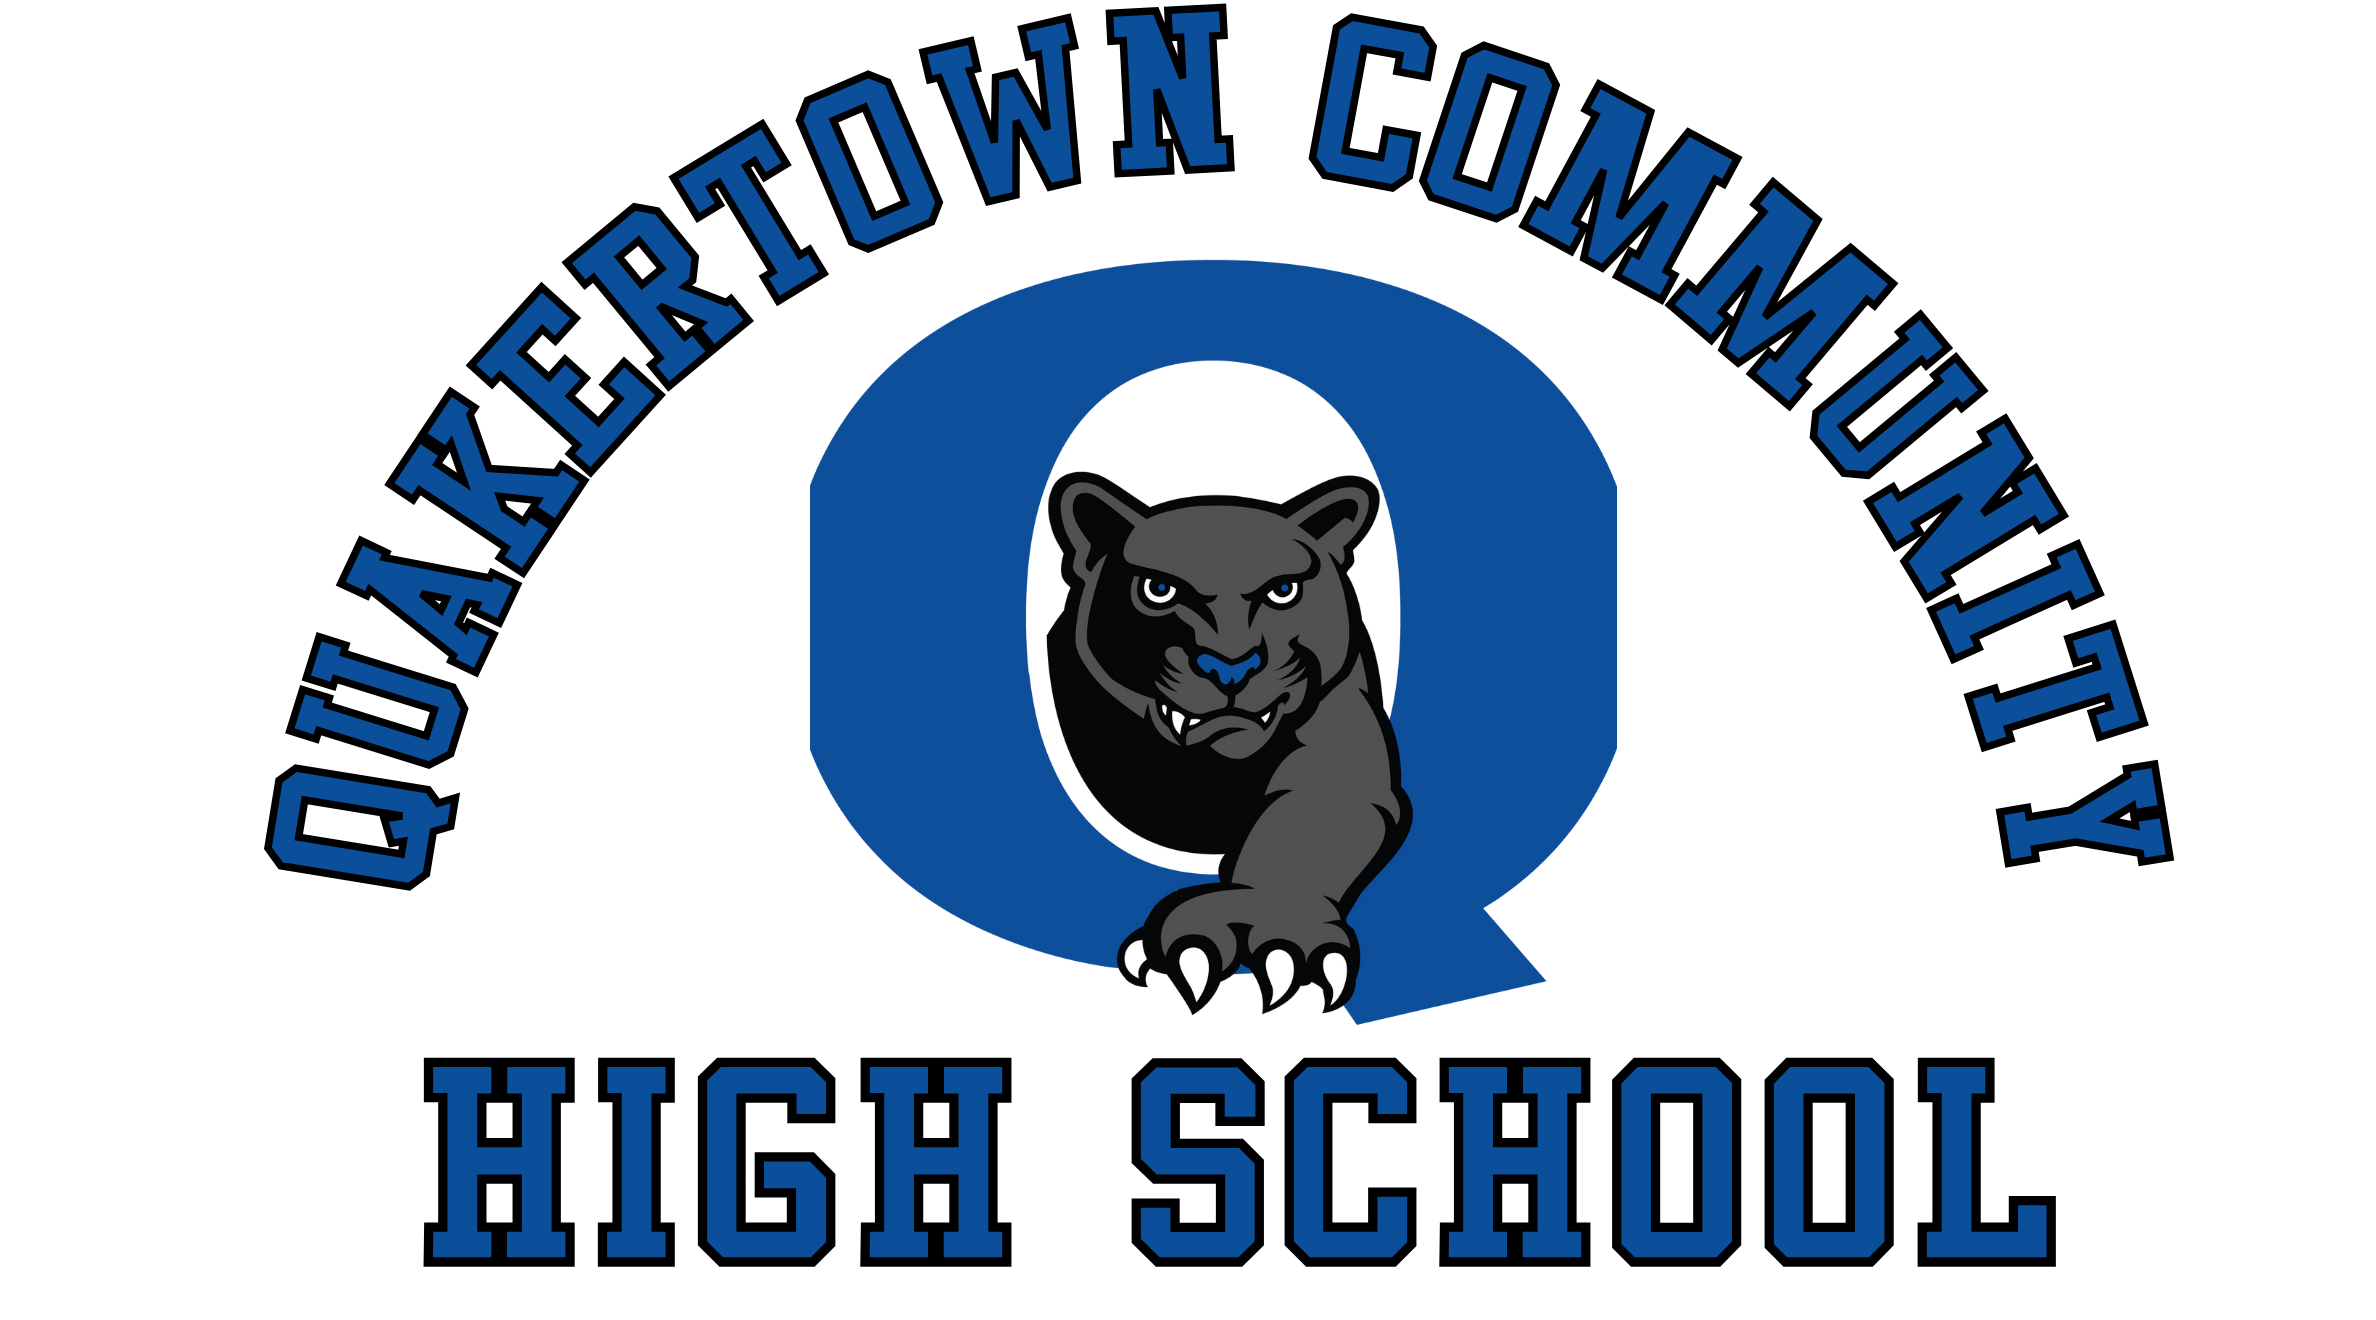 Quakertown Community High School